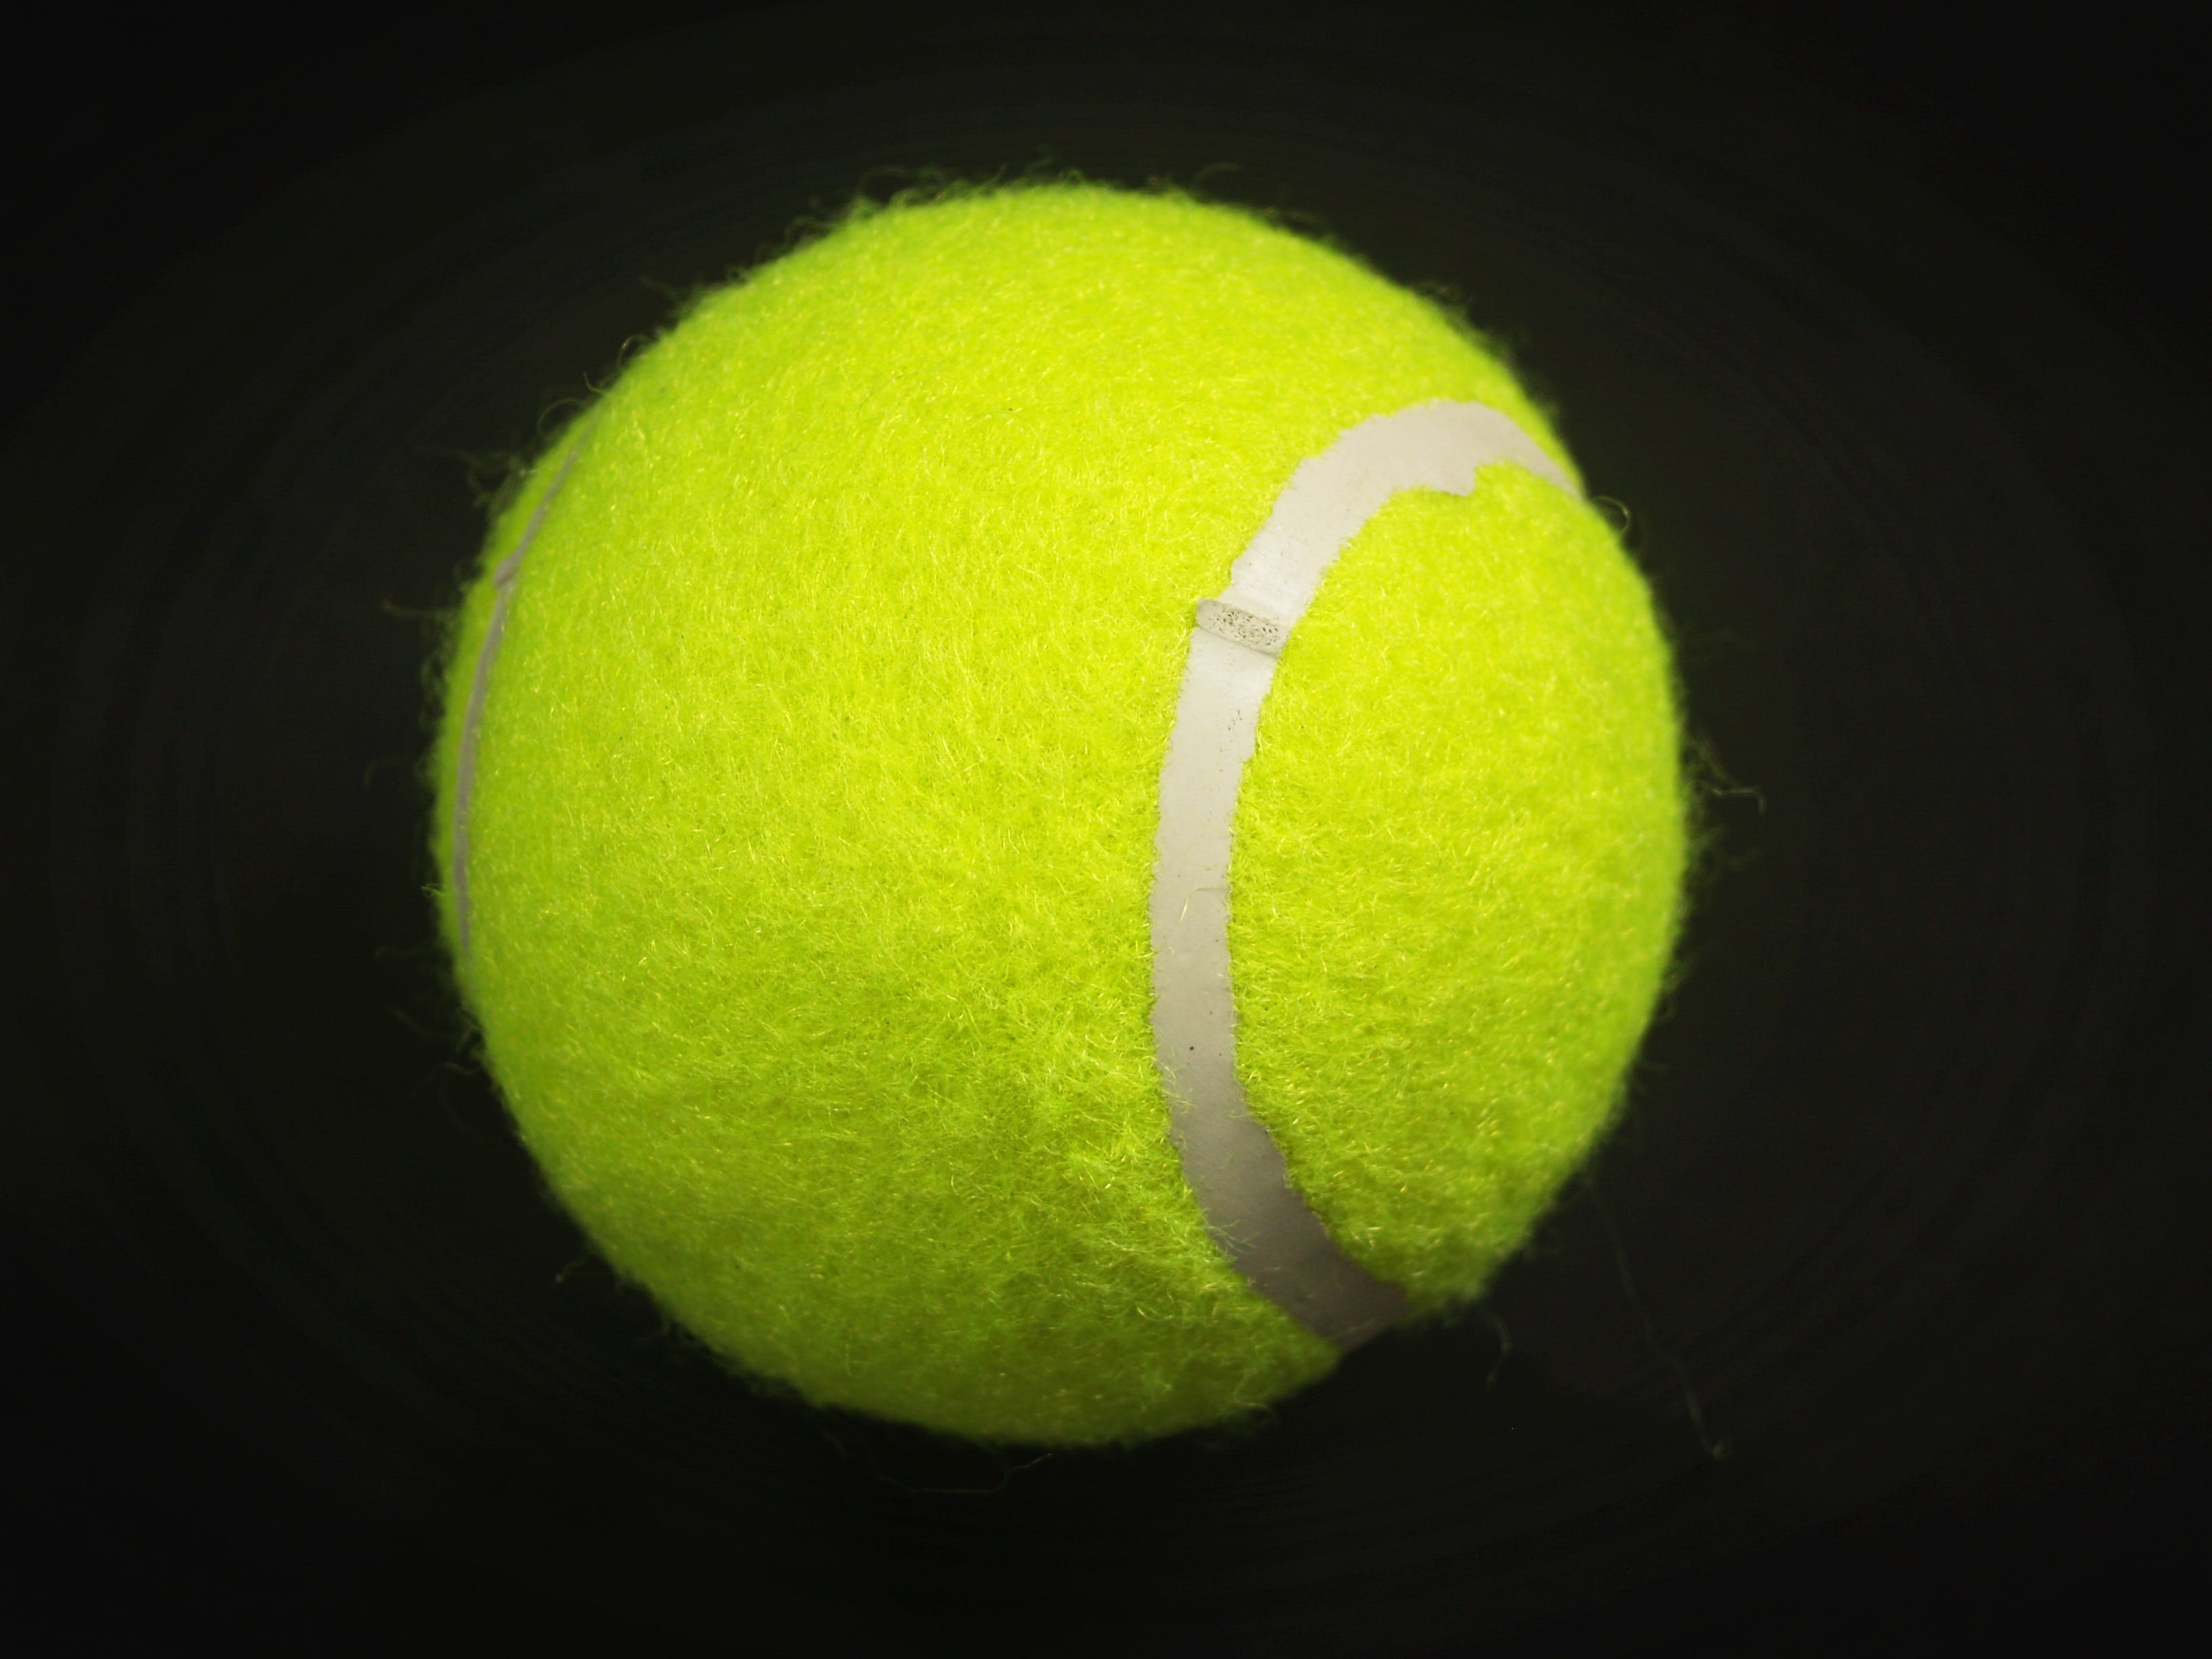 pelota de tenis,pelota de tenis,verde,tenis,equipo deportivo,deportes